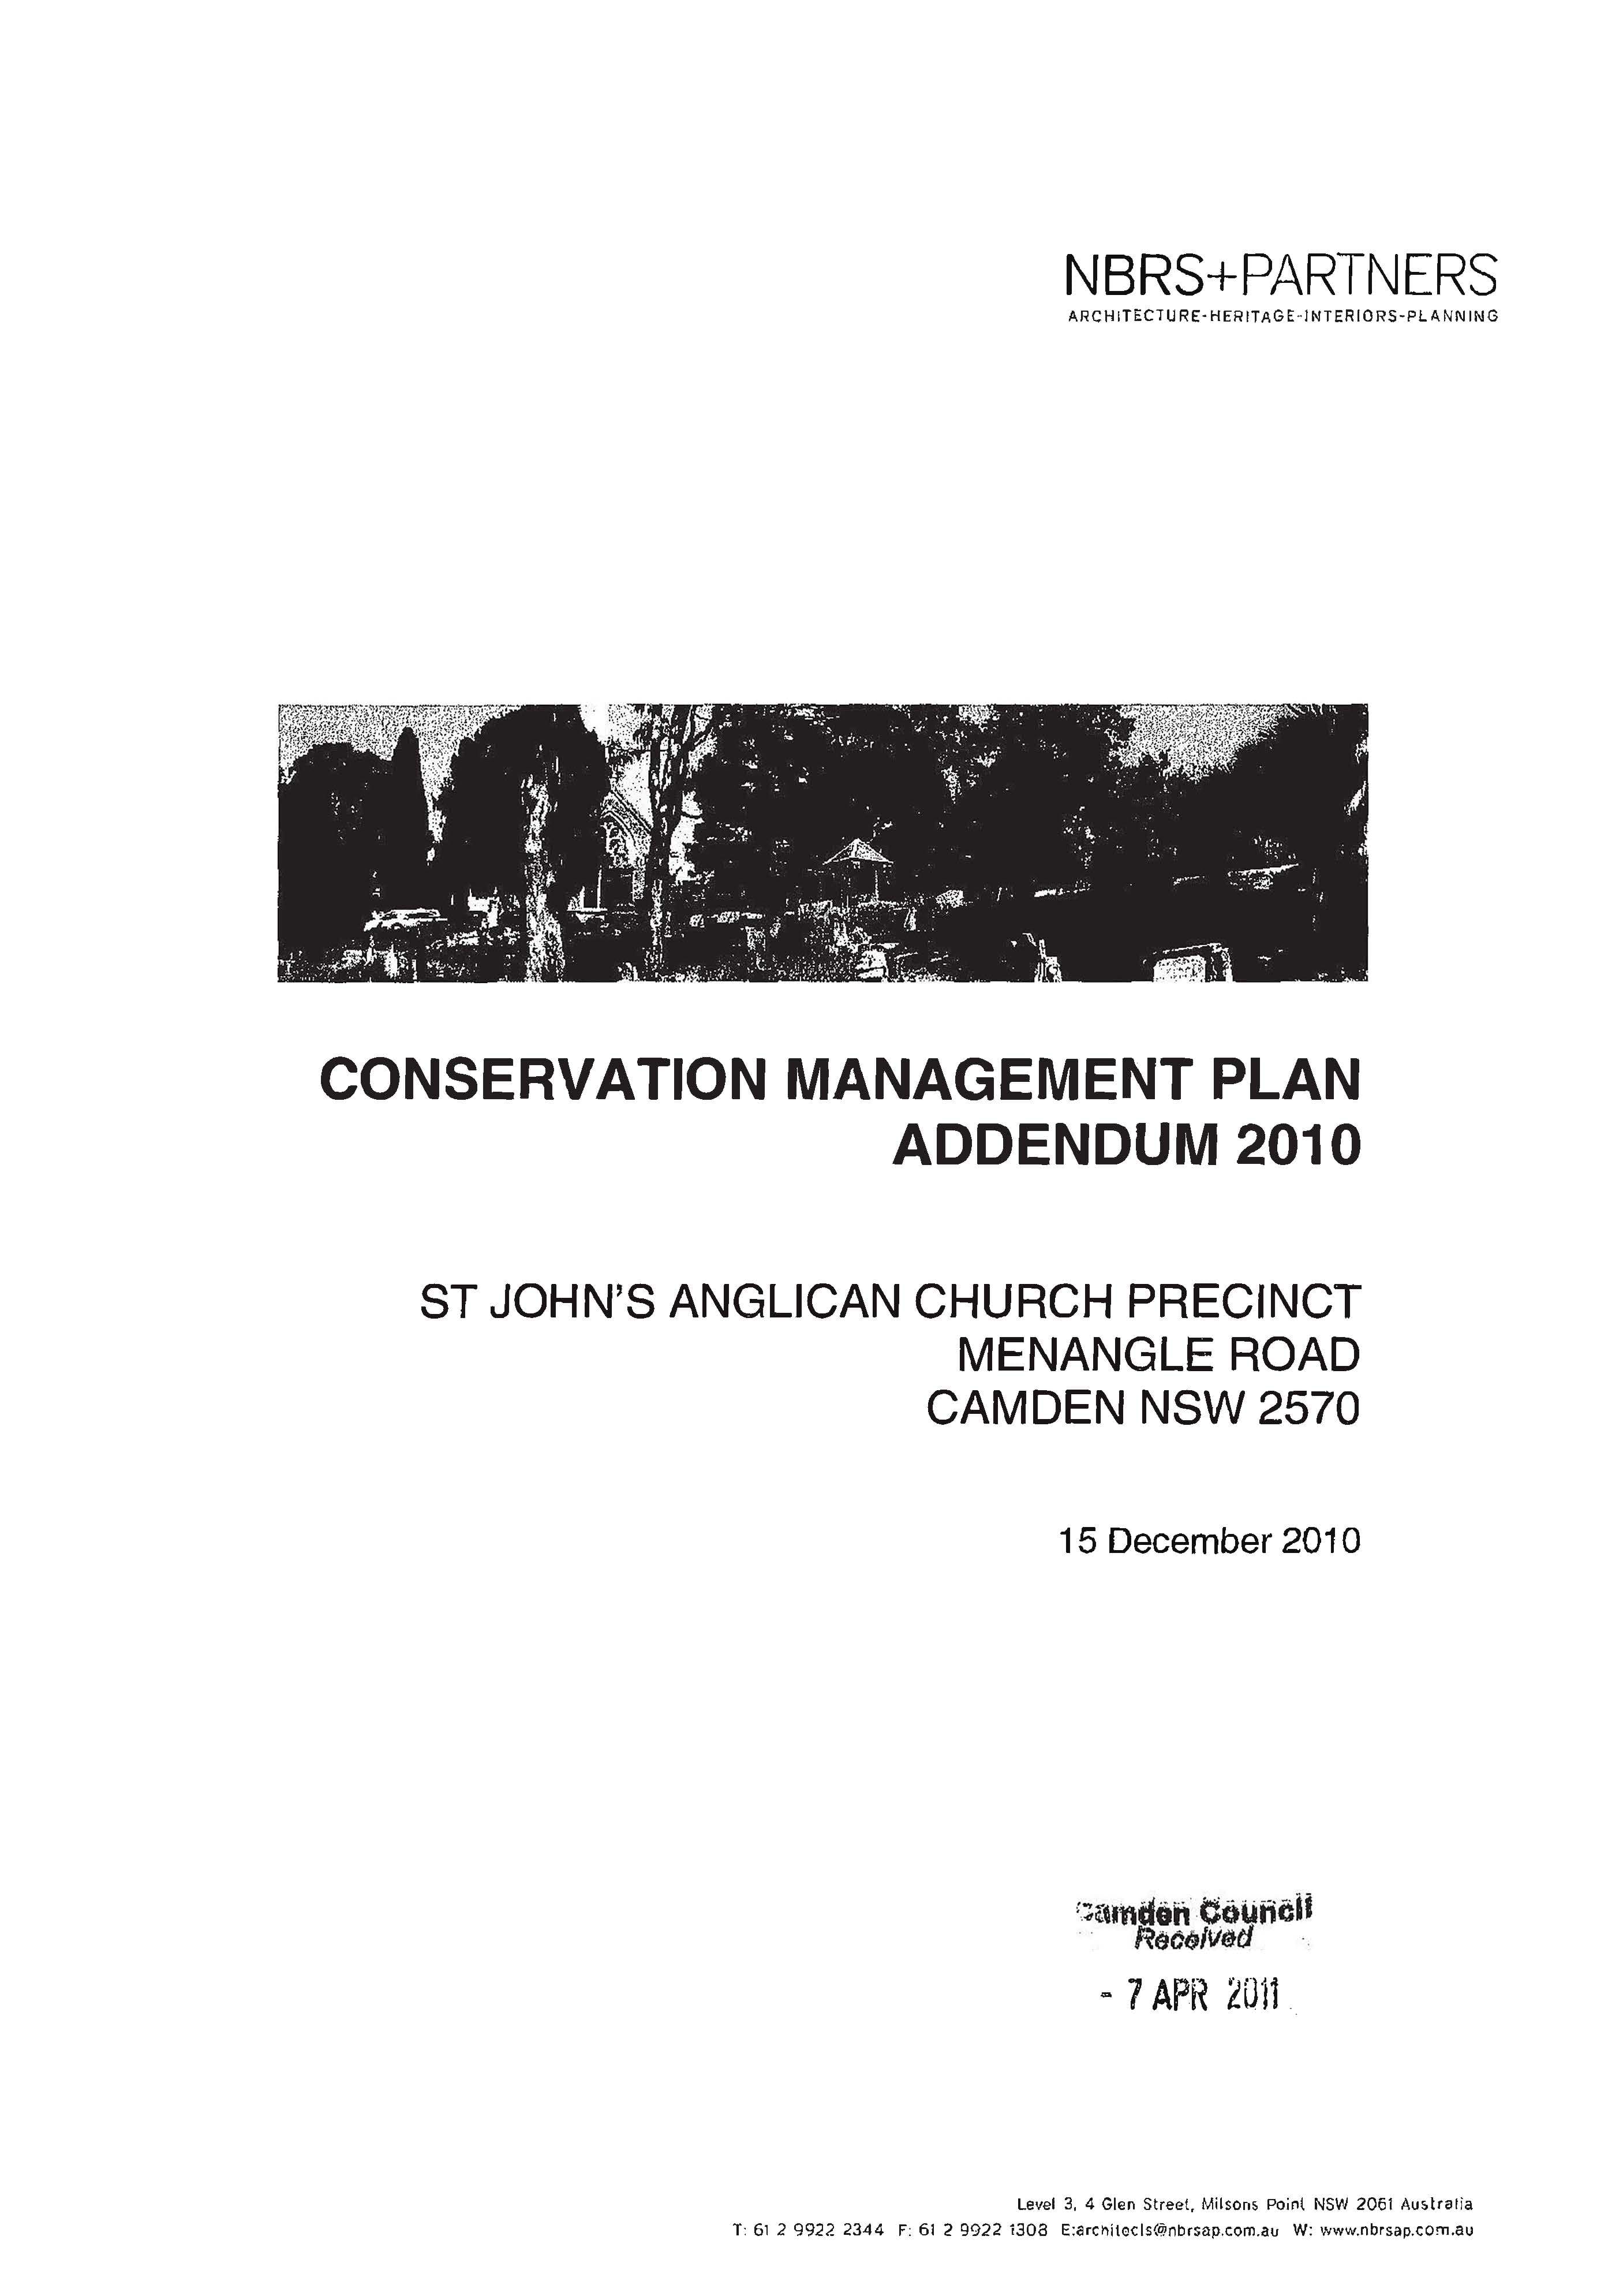 Conservation Management Plan Addendum